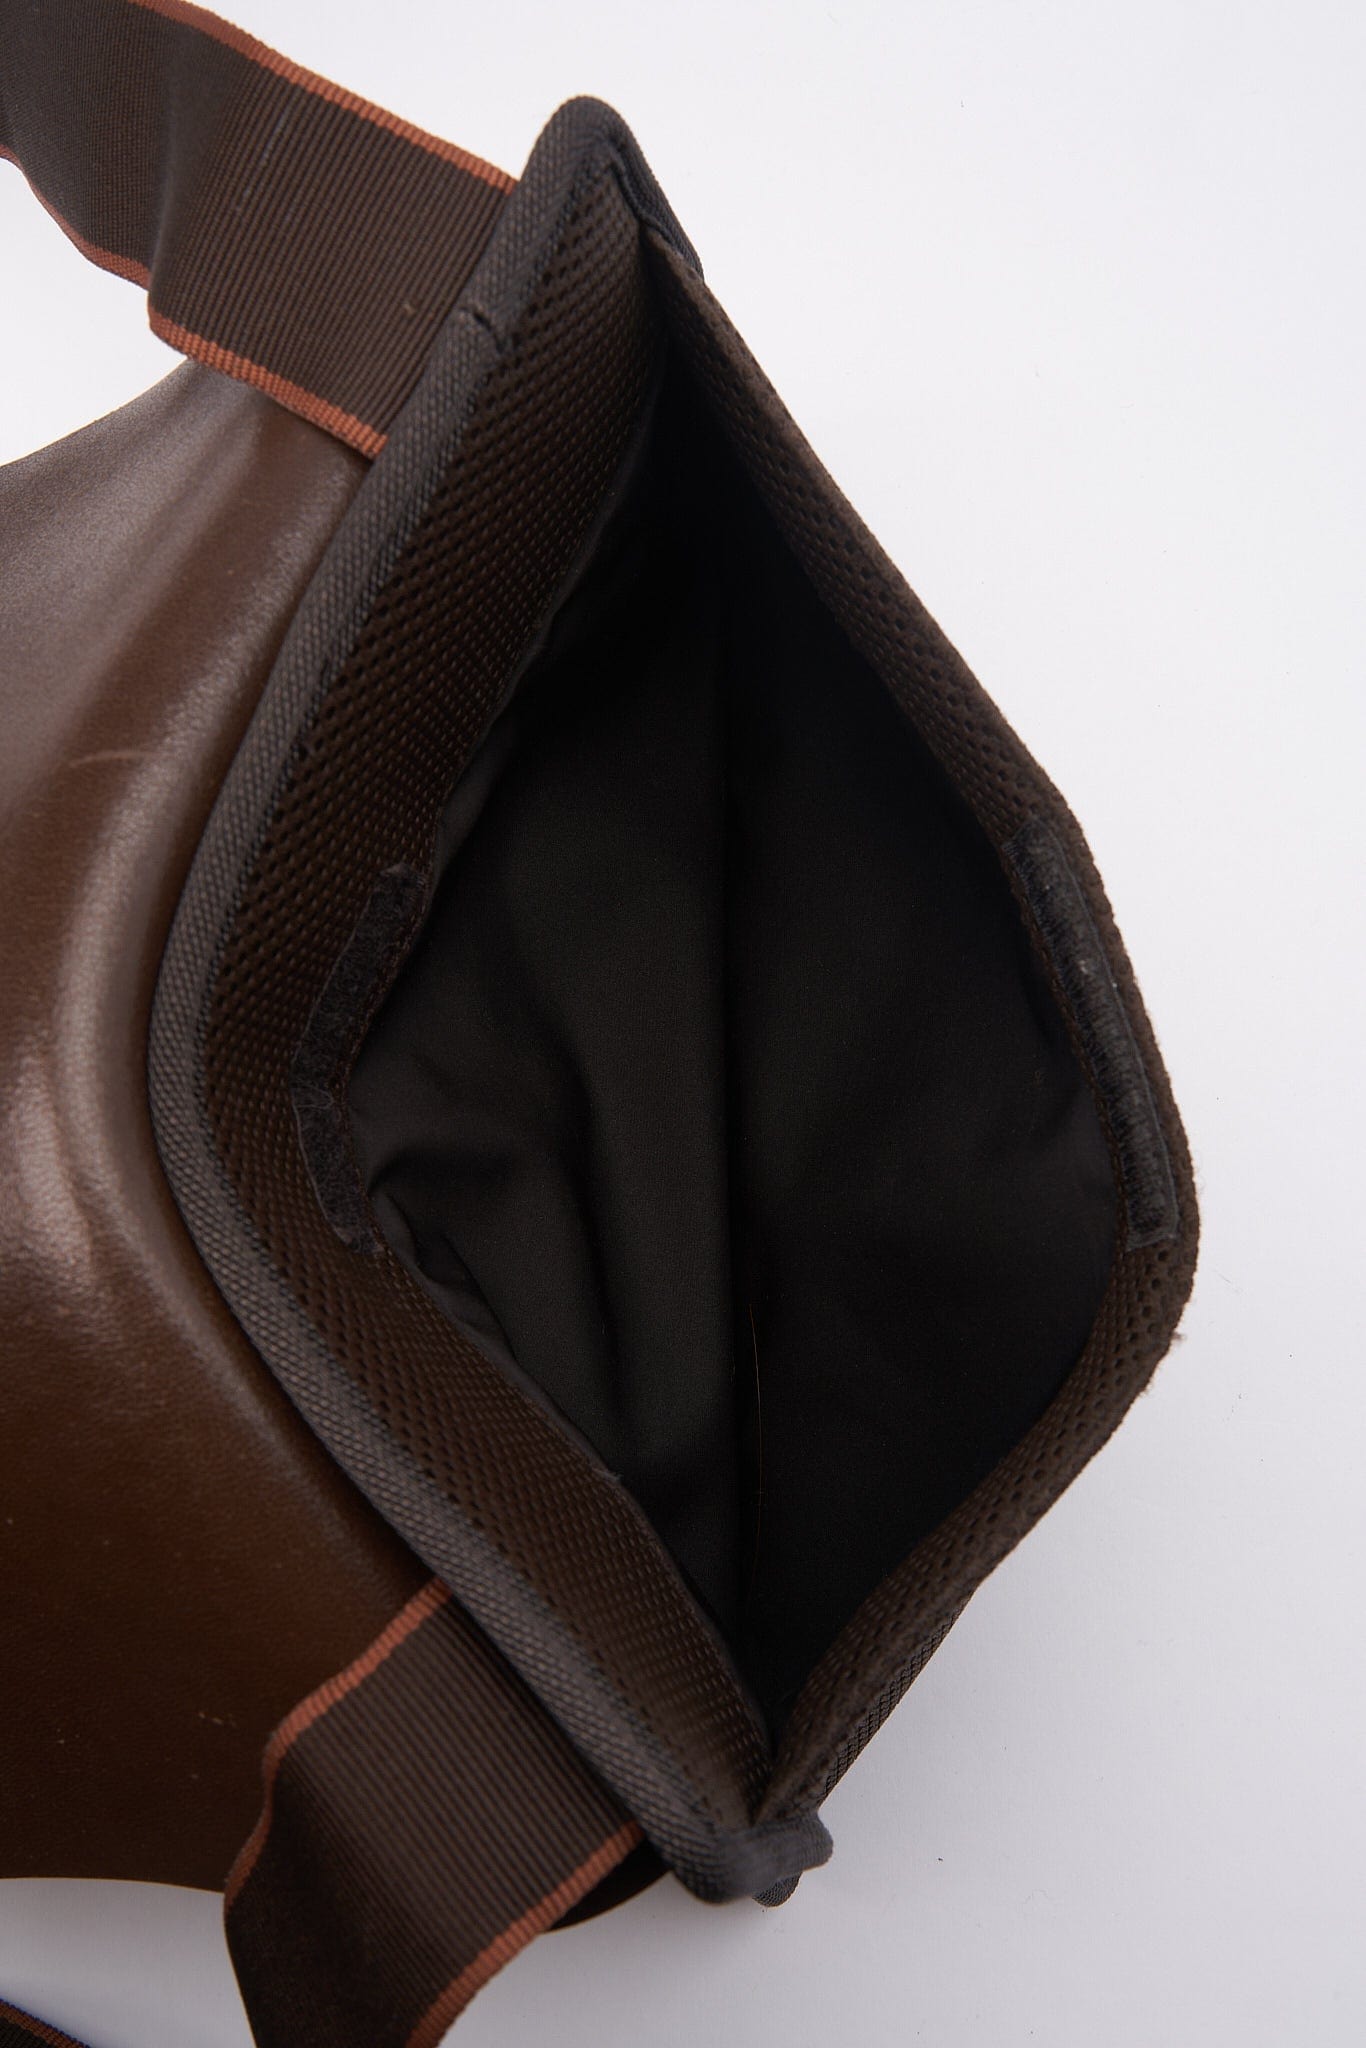 Vintage 90'S Miu Miu Brown Leather Crossbody Bag